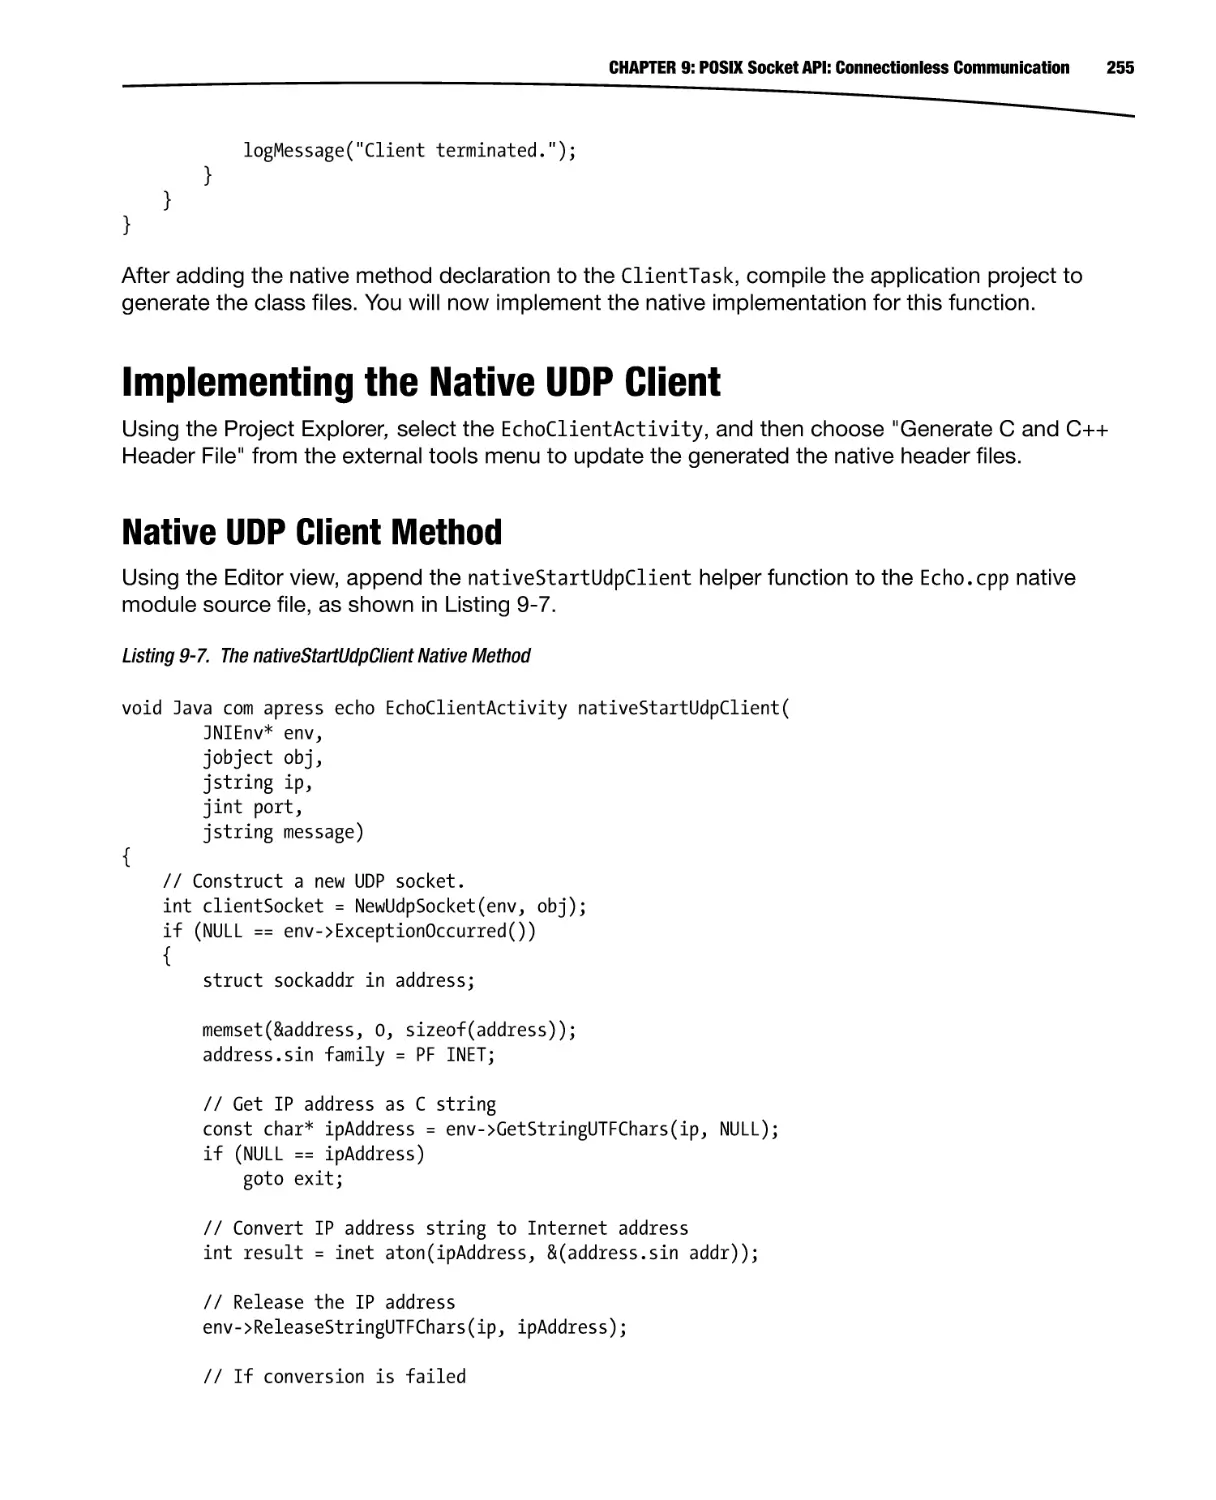 Implementing the Native UDP Client
Native UDP Client Method